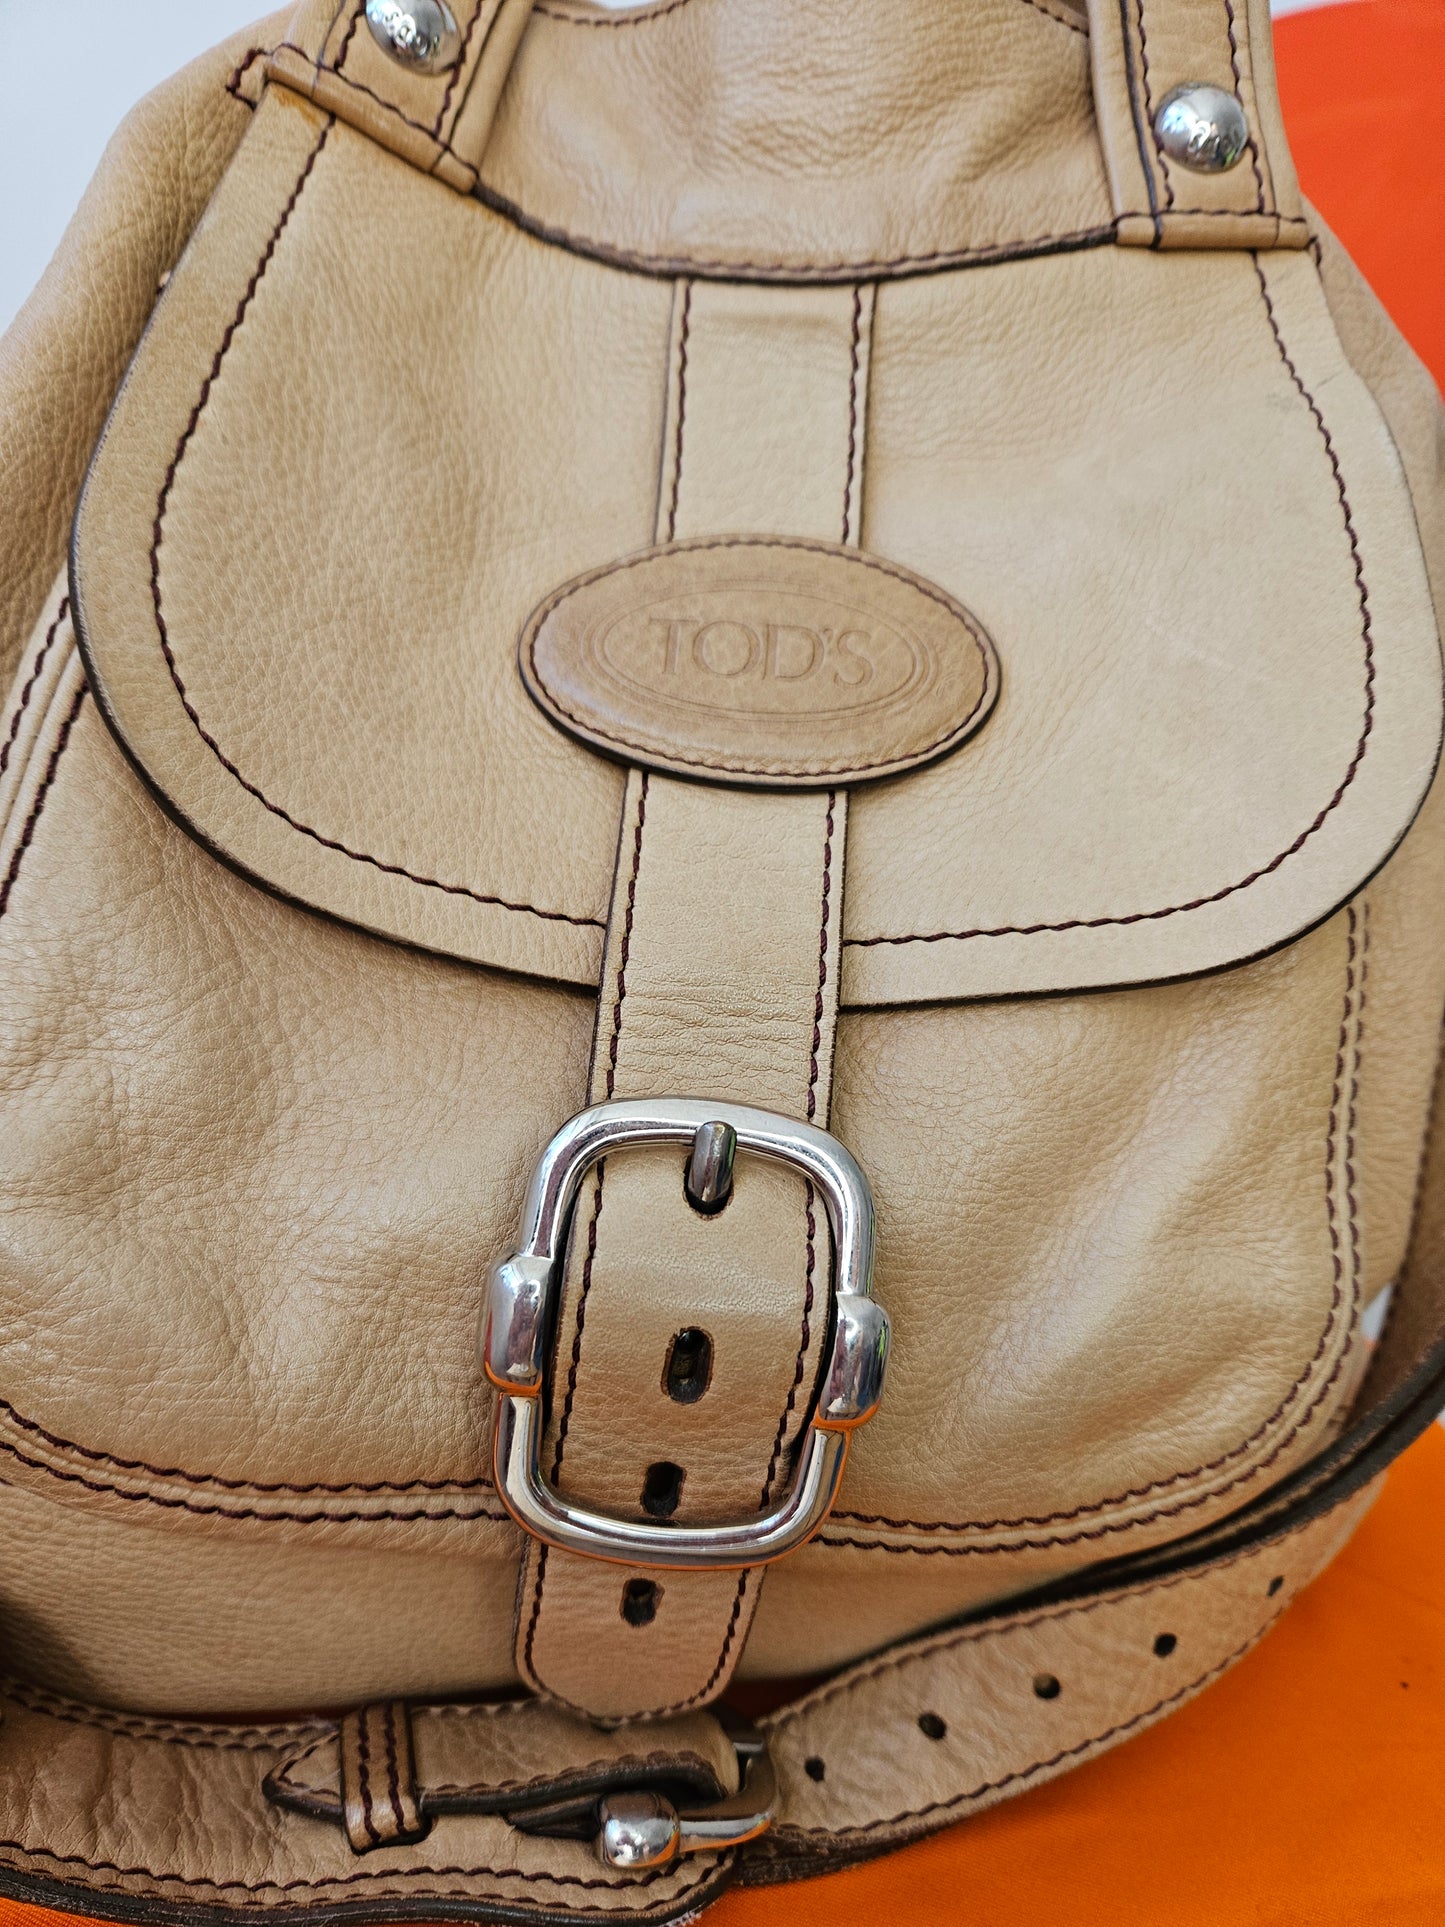 TOD'S Nude Leather Handbag sizeM